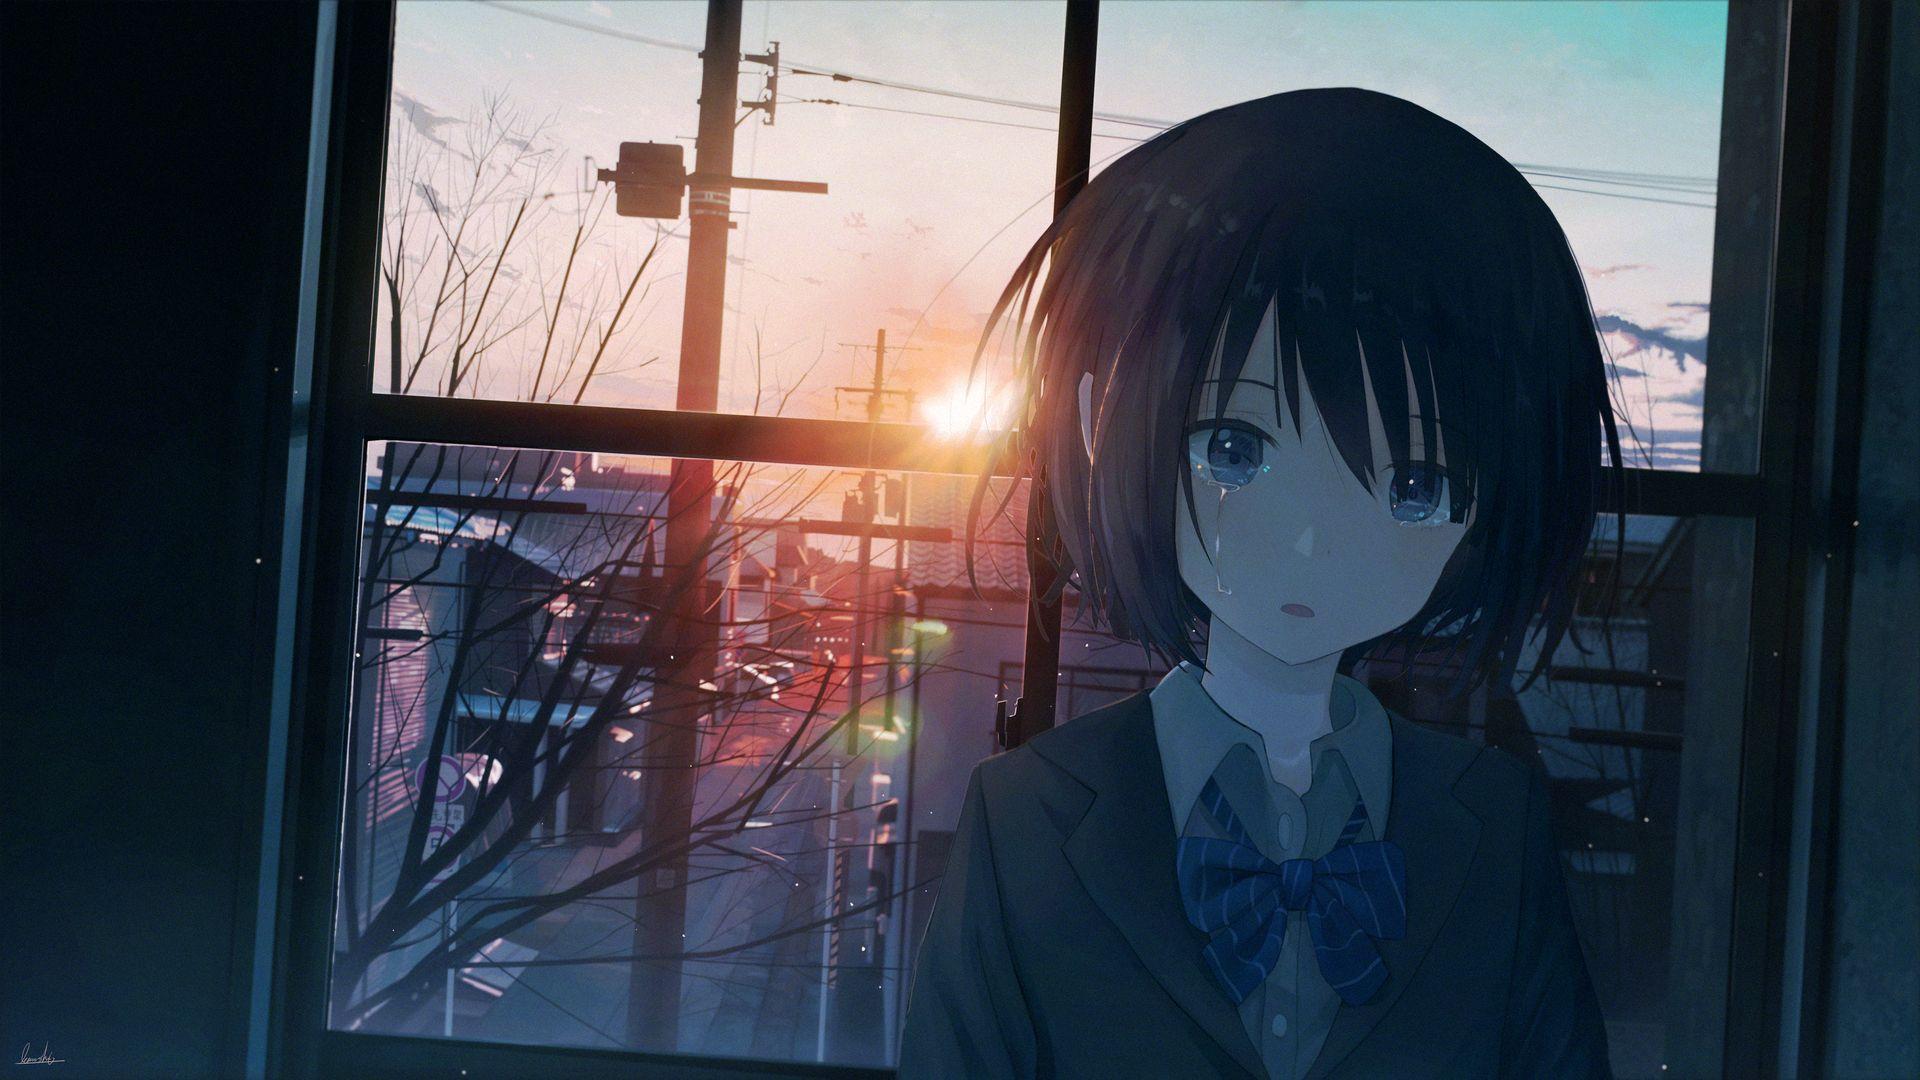 Anime 1920x1080 anime girls morning Japan dawn crying window frames city bow tie short hair black hair